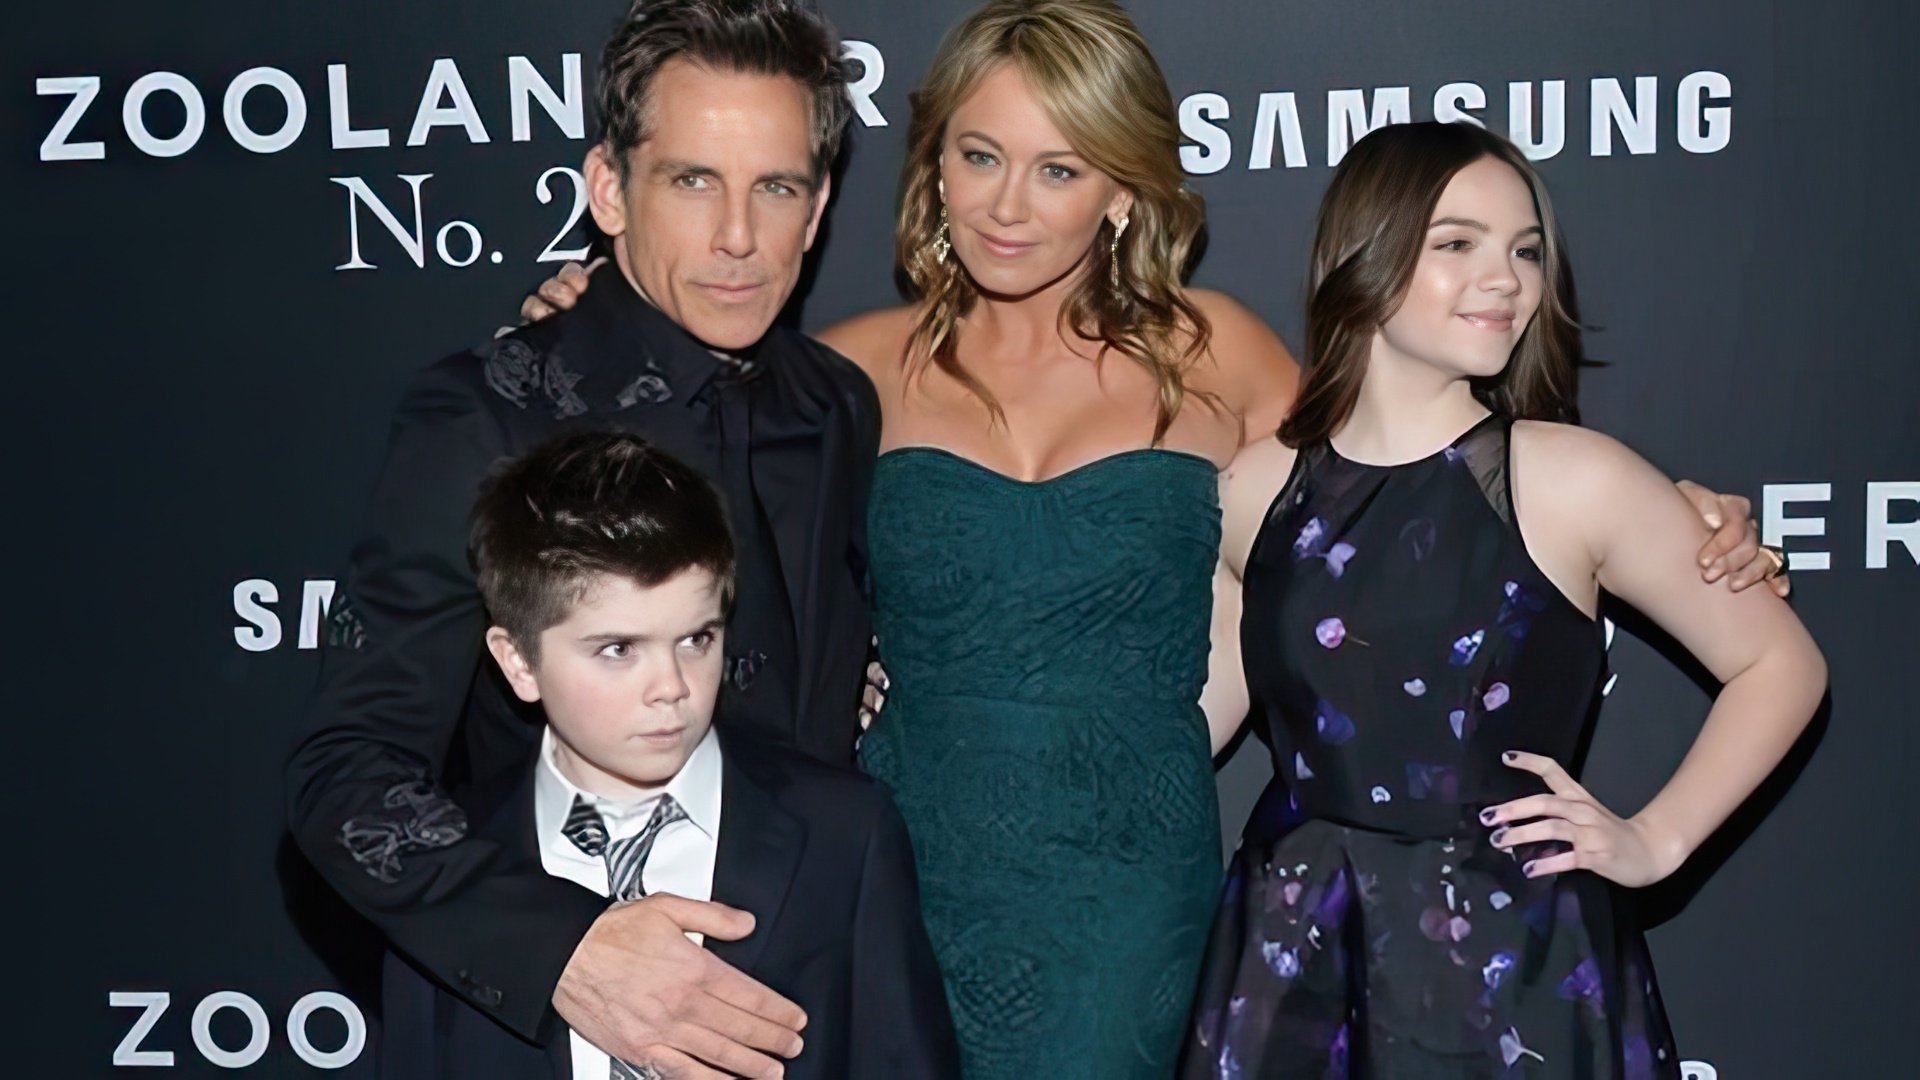 Ben Stiller with his children and wife